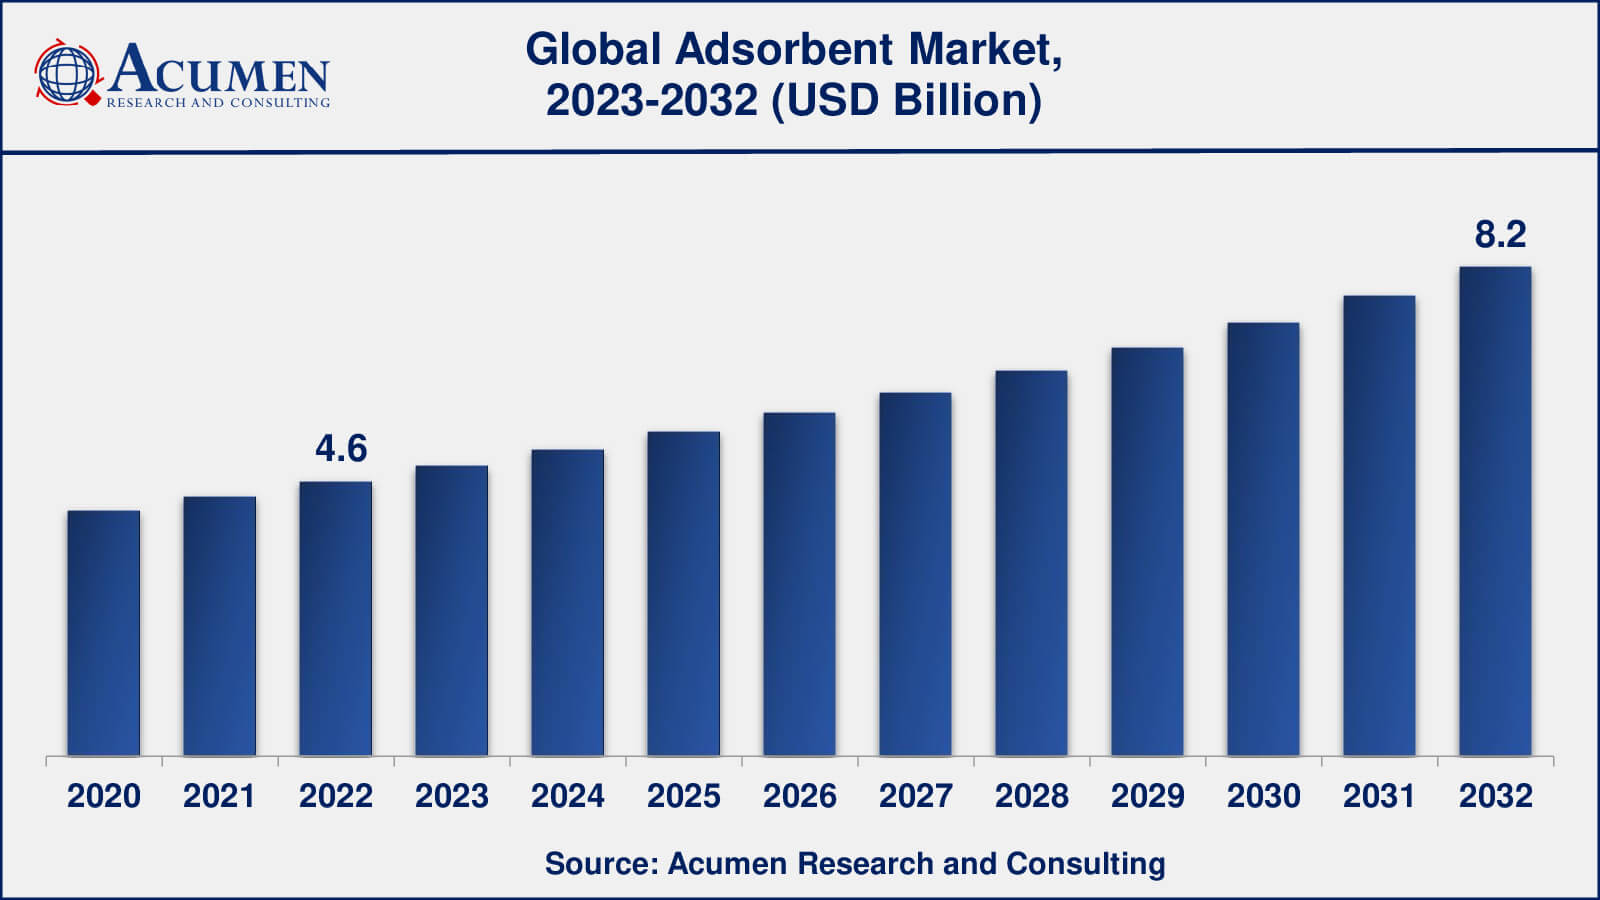 Global Adsorbent Market Dynamics